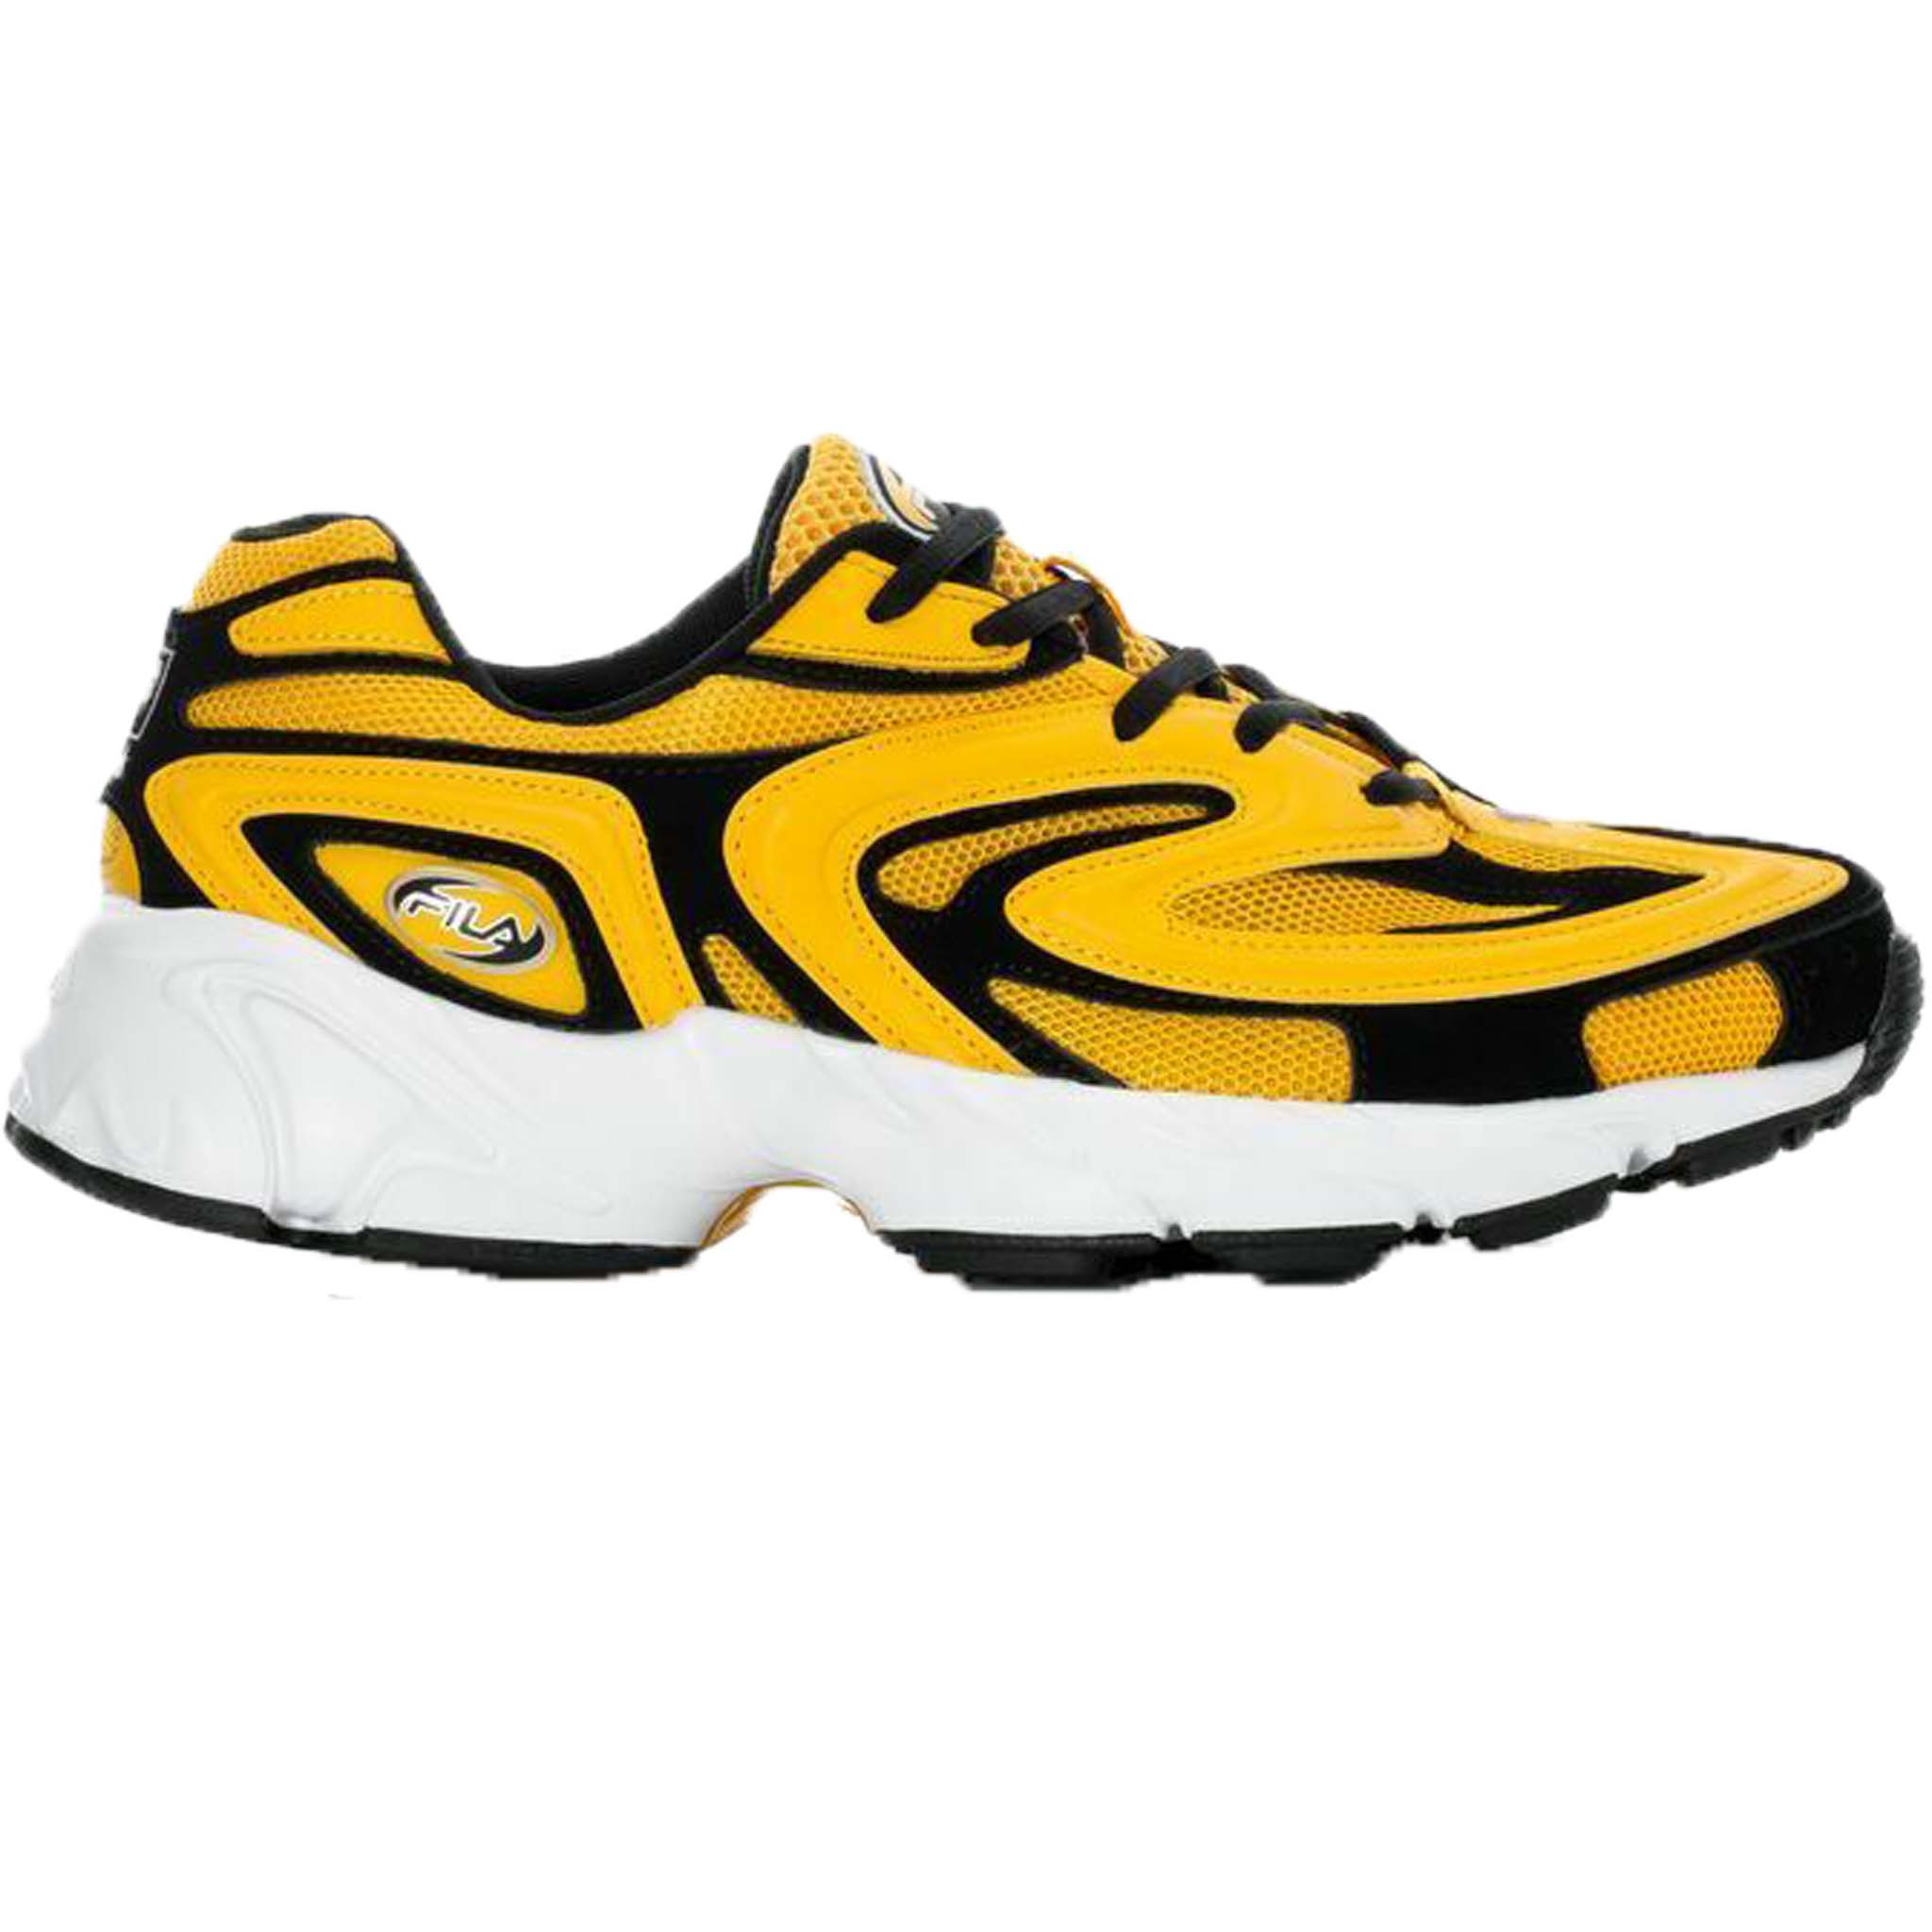 Fila Men's Creator Casual Running Shoes Yellow Black – That Shoe Store More